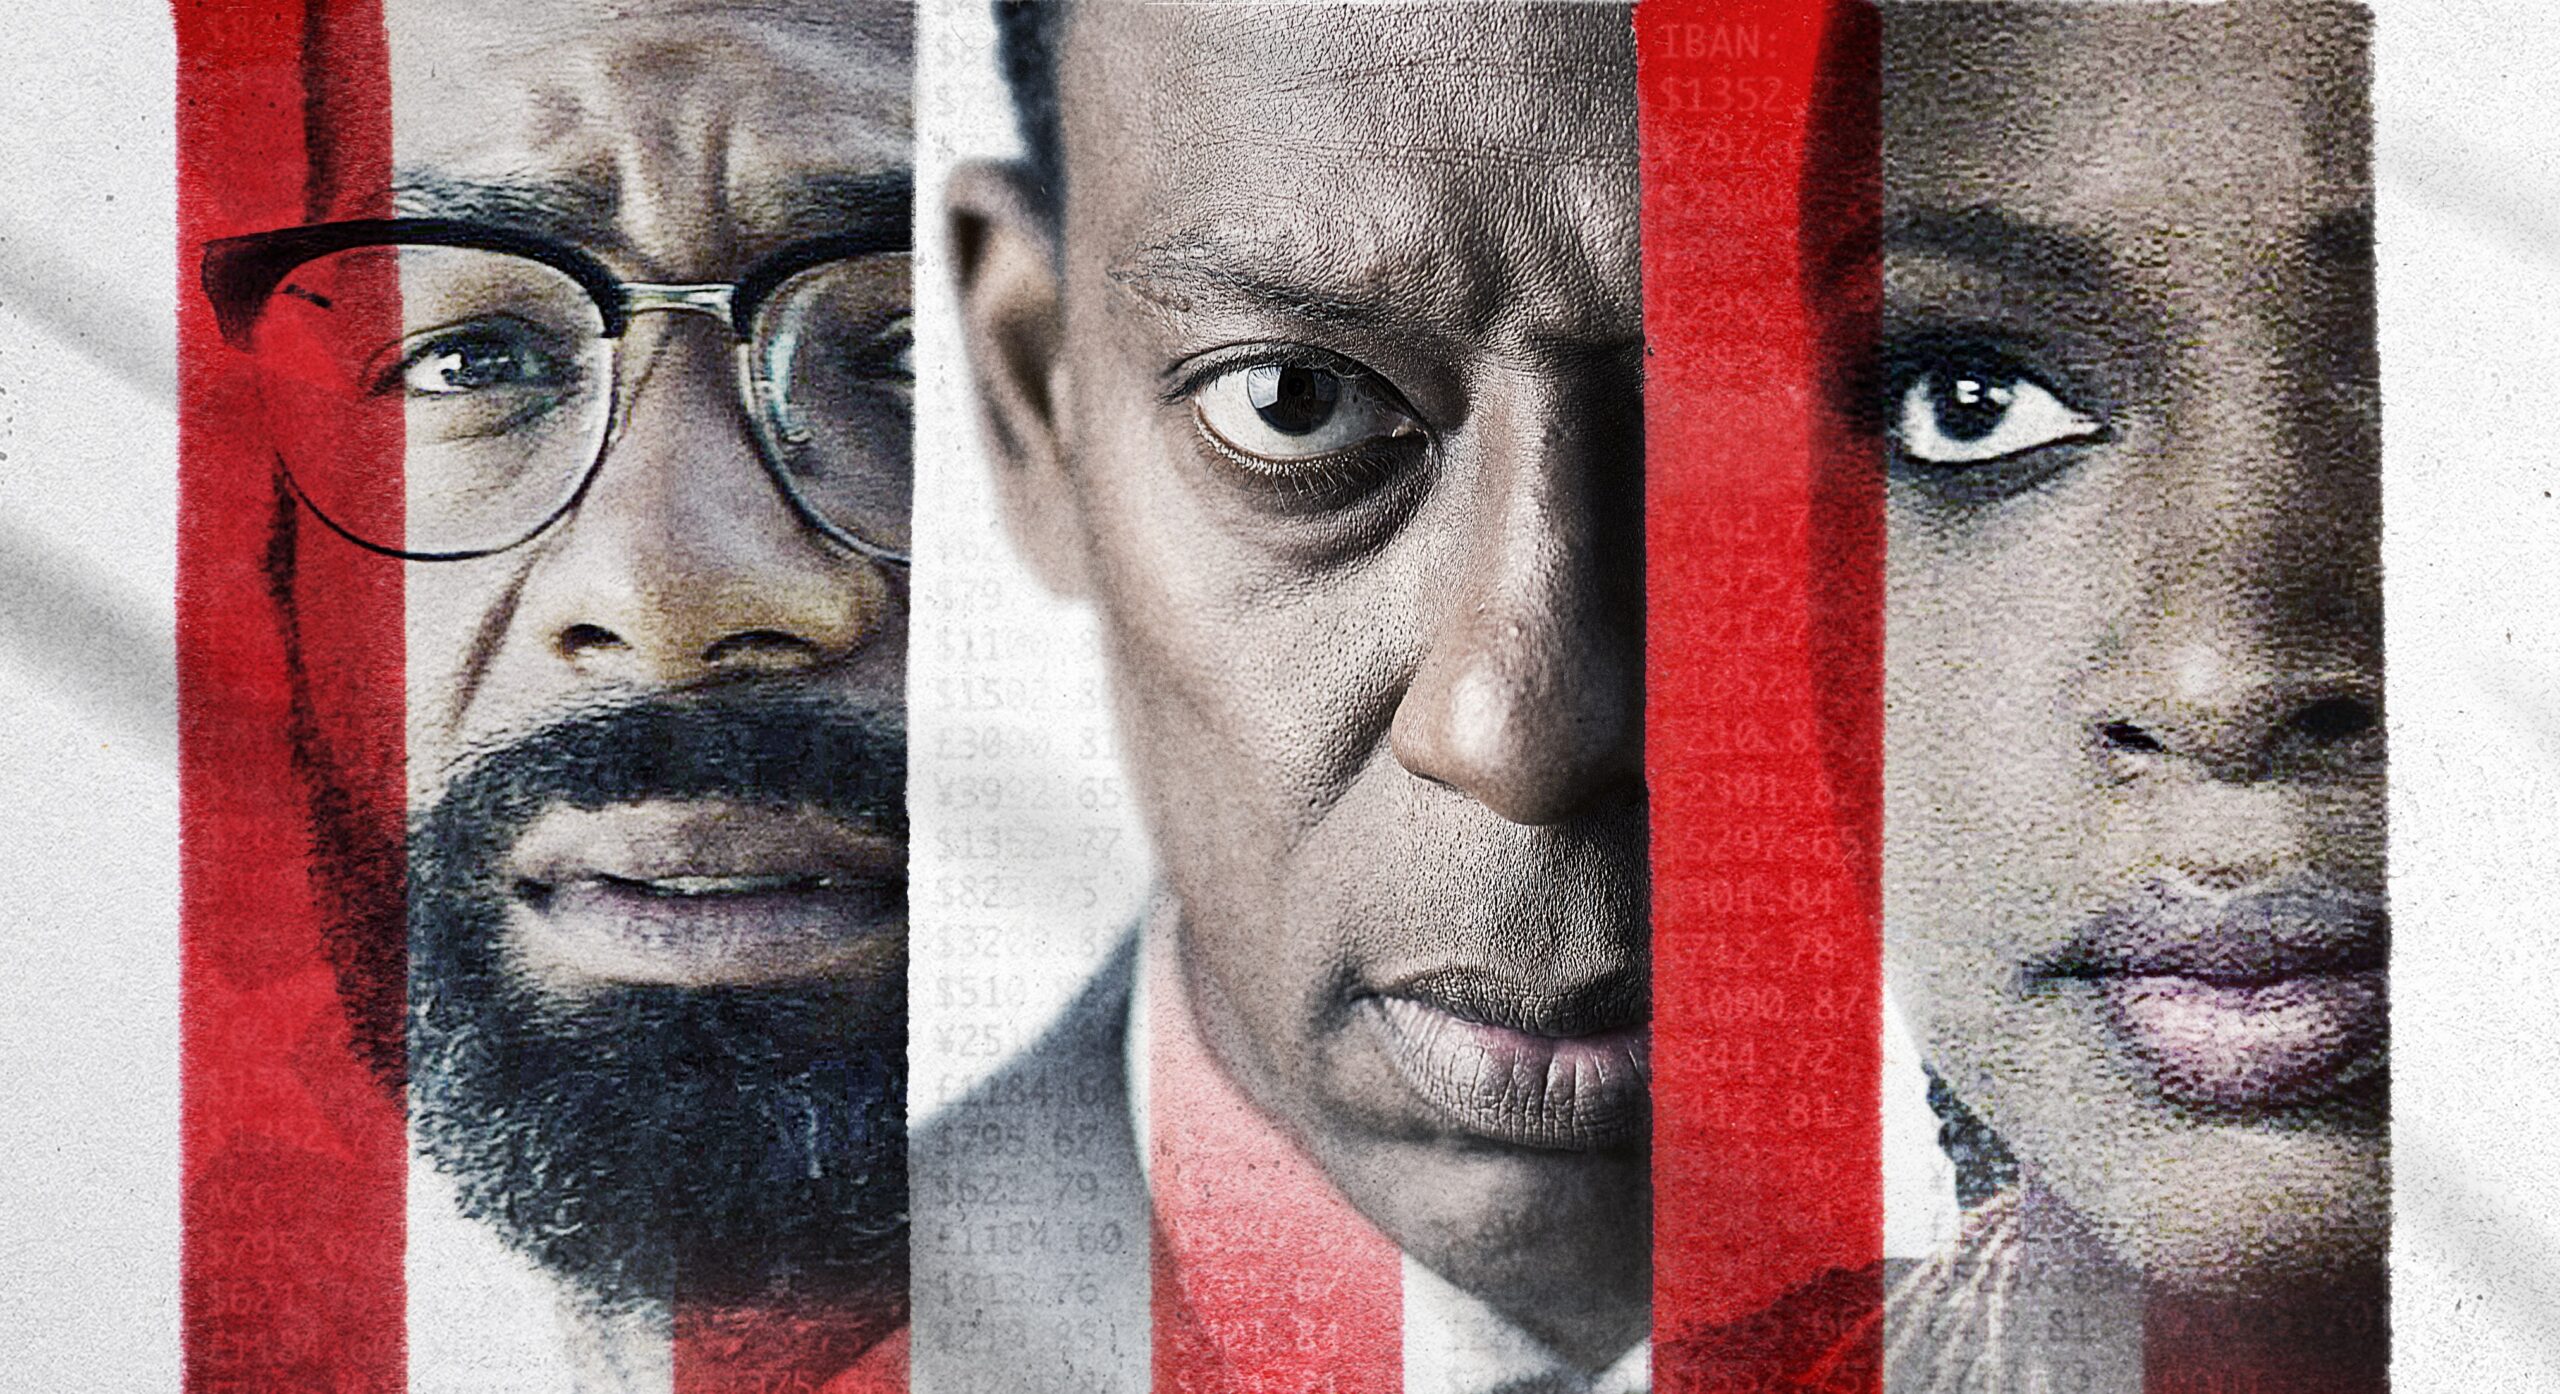 88 Political Thriller Trailer Reveals White Supremacy in Black Politics